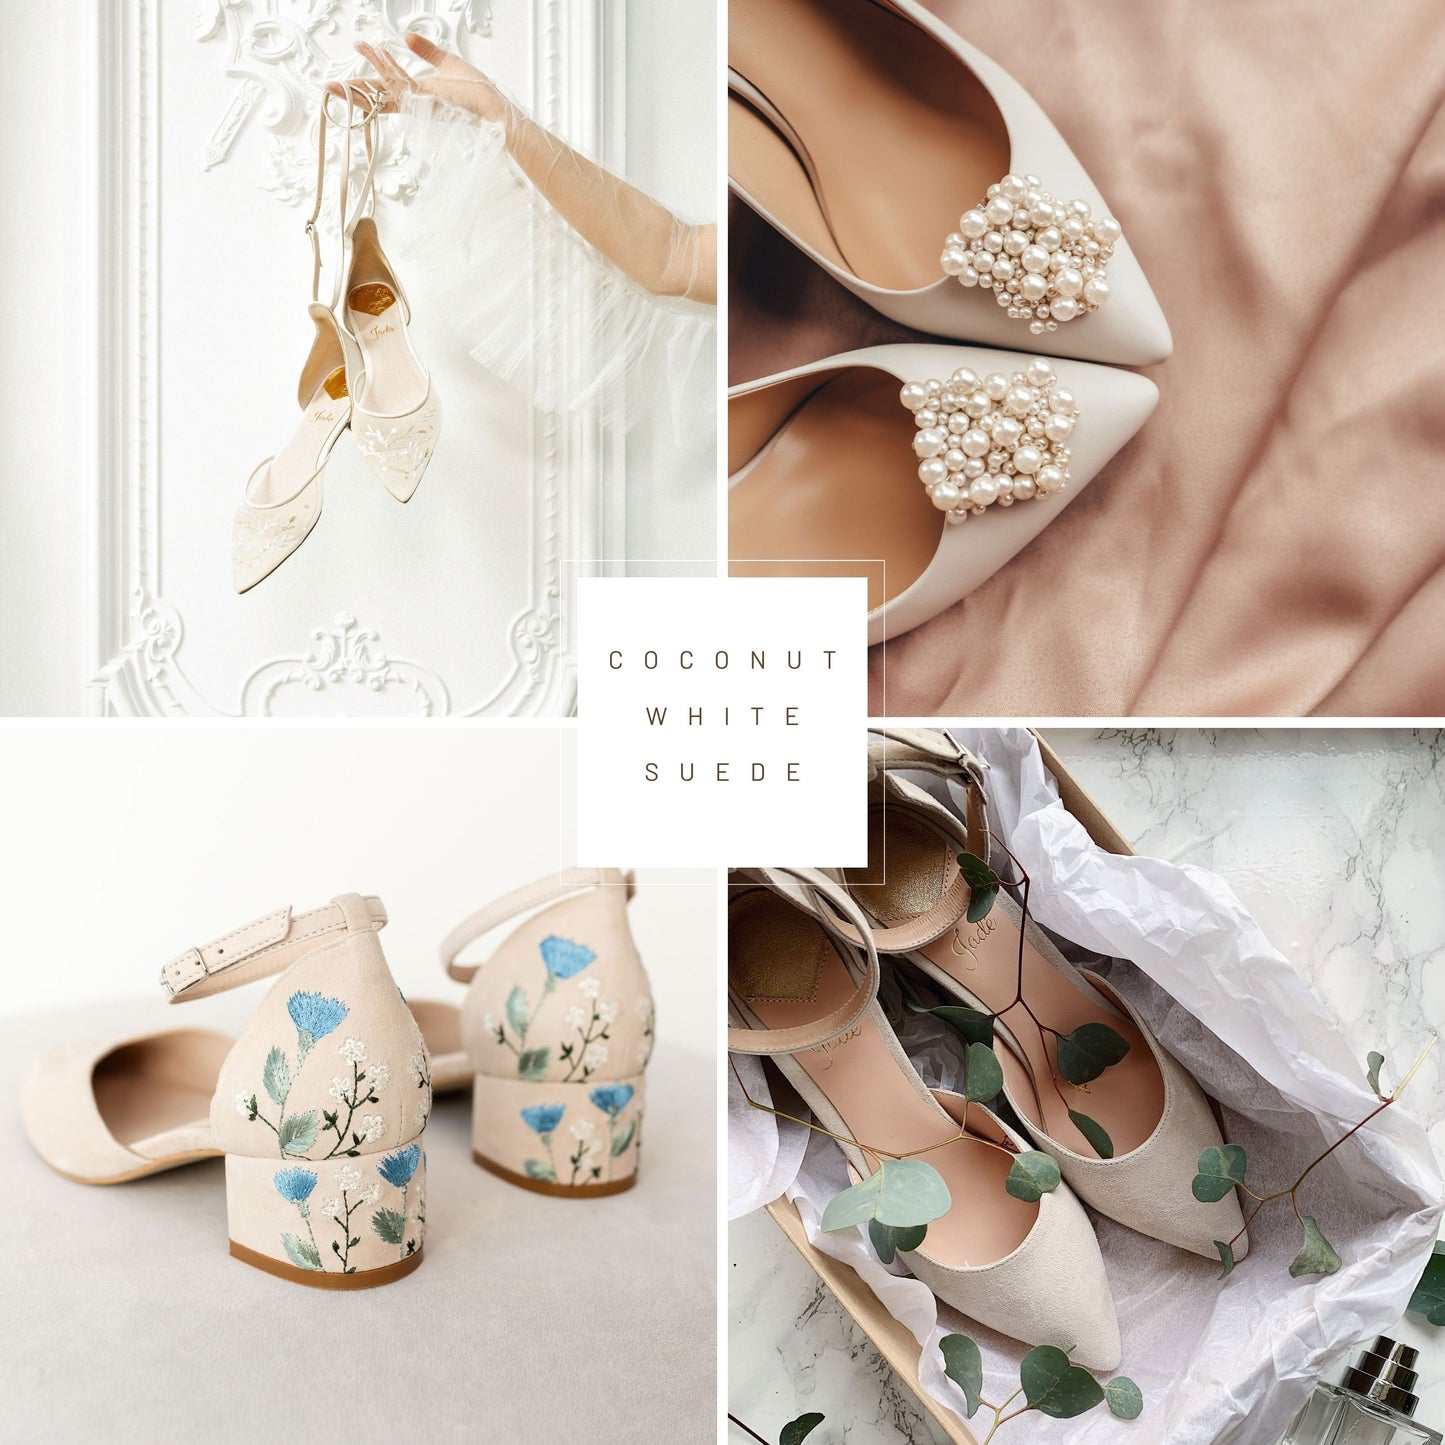 jade-5-wedding-shoes